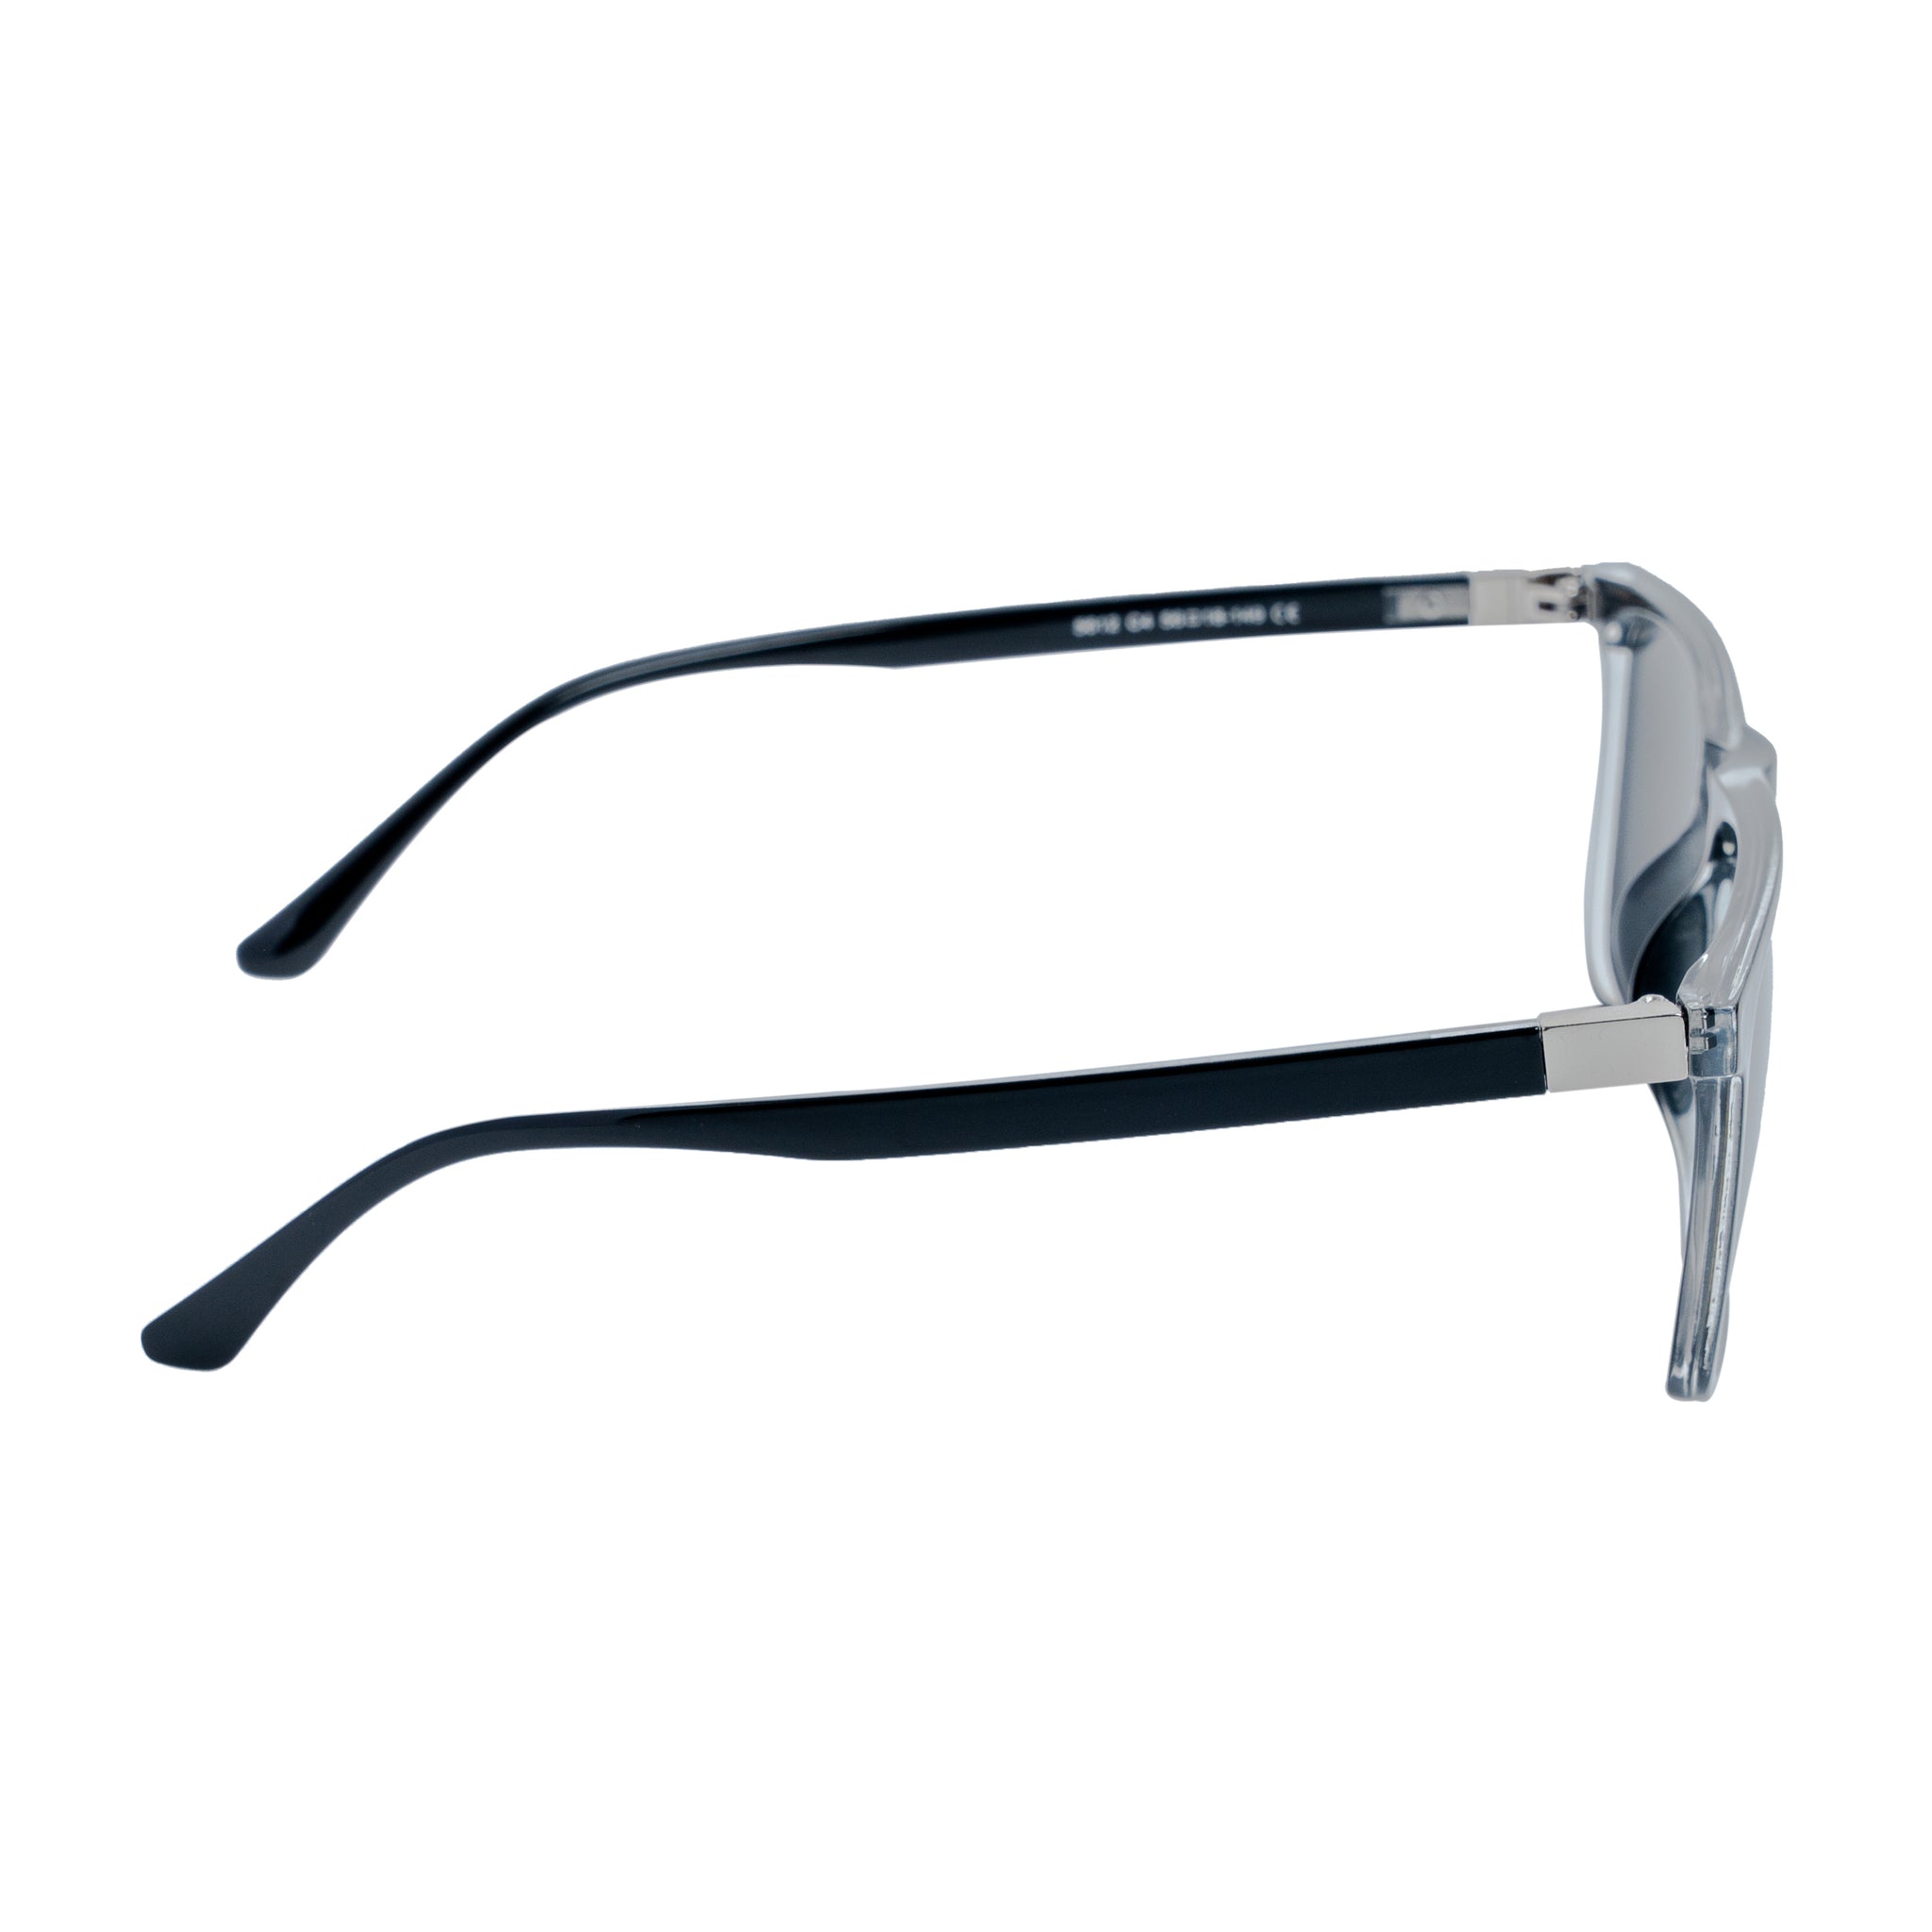 Chokore UV400 Protected & Polarized Cycling Sunglasses (Black)